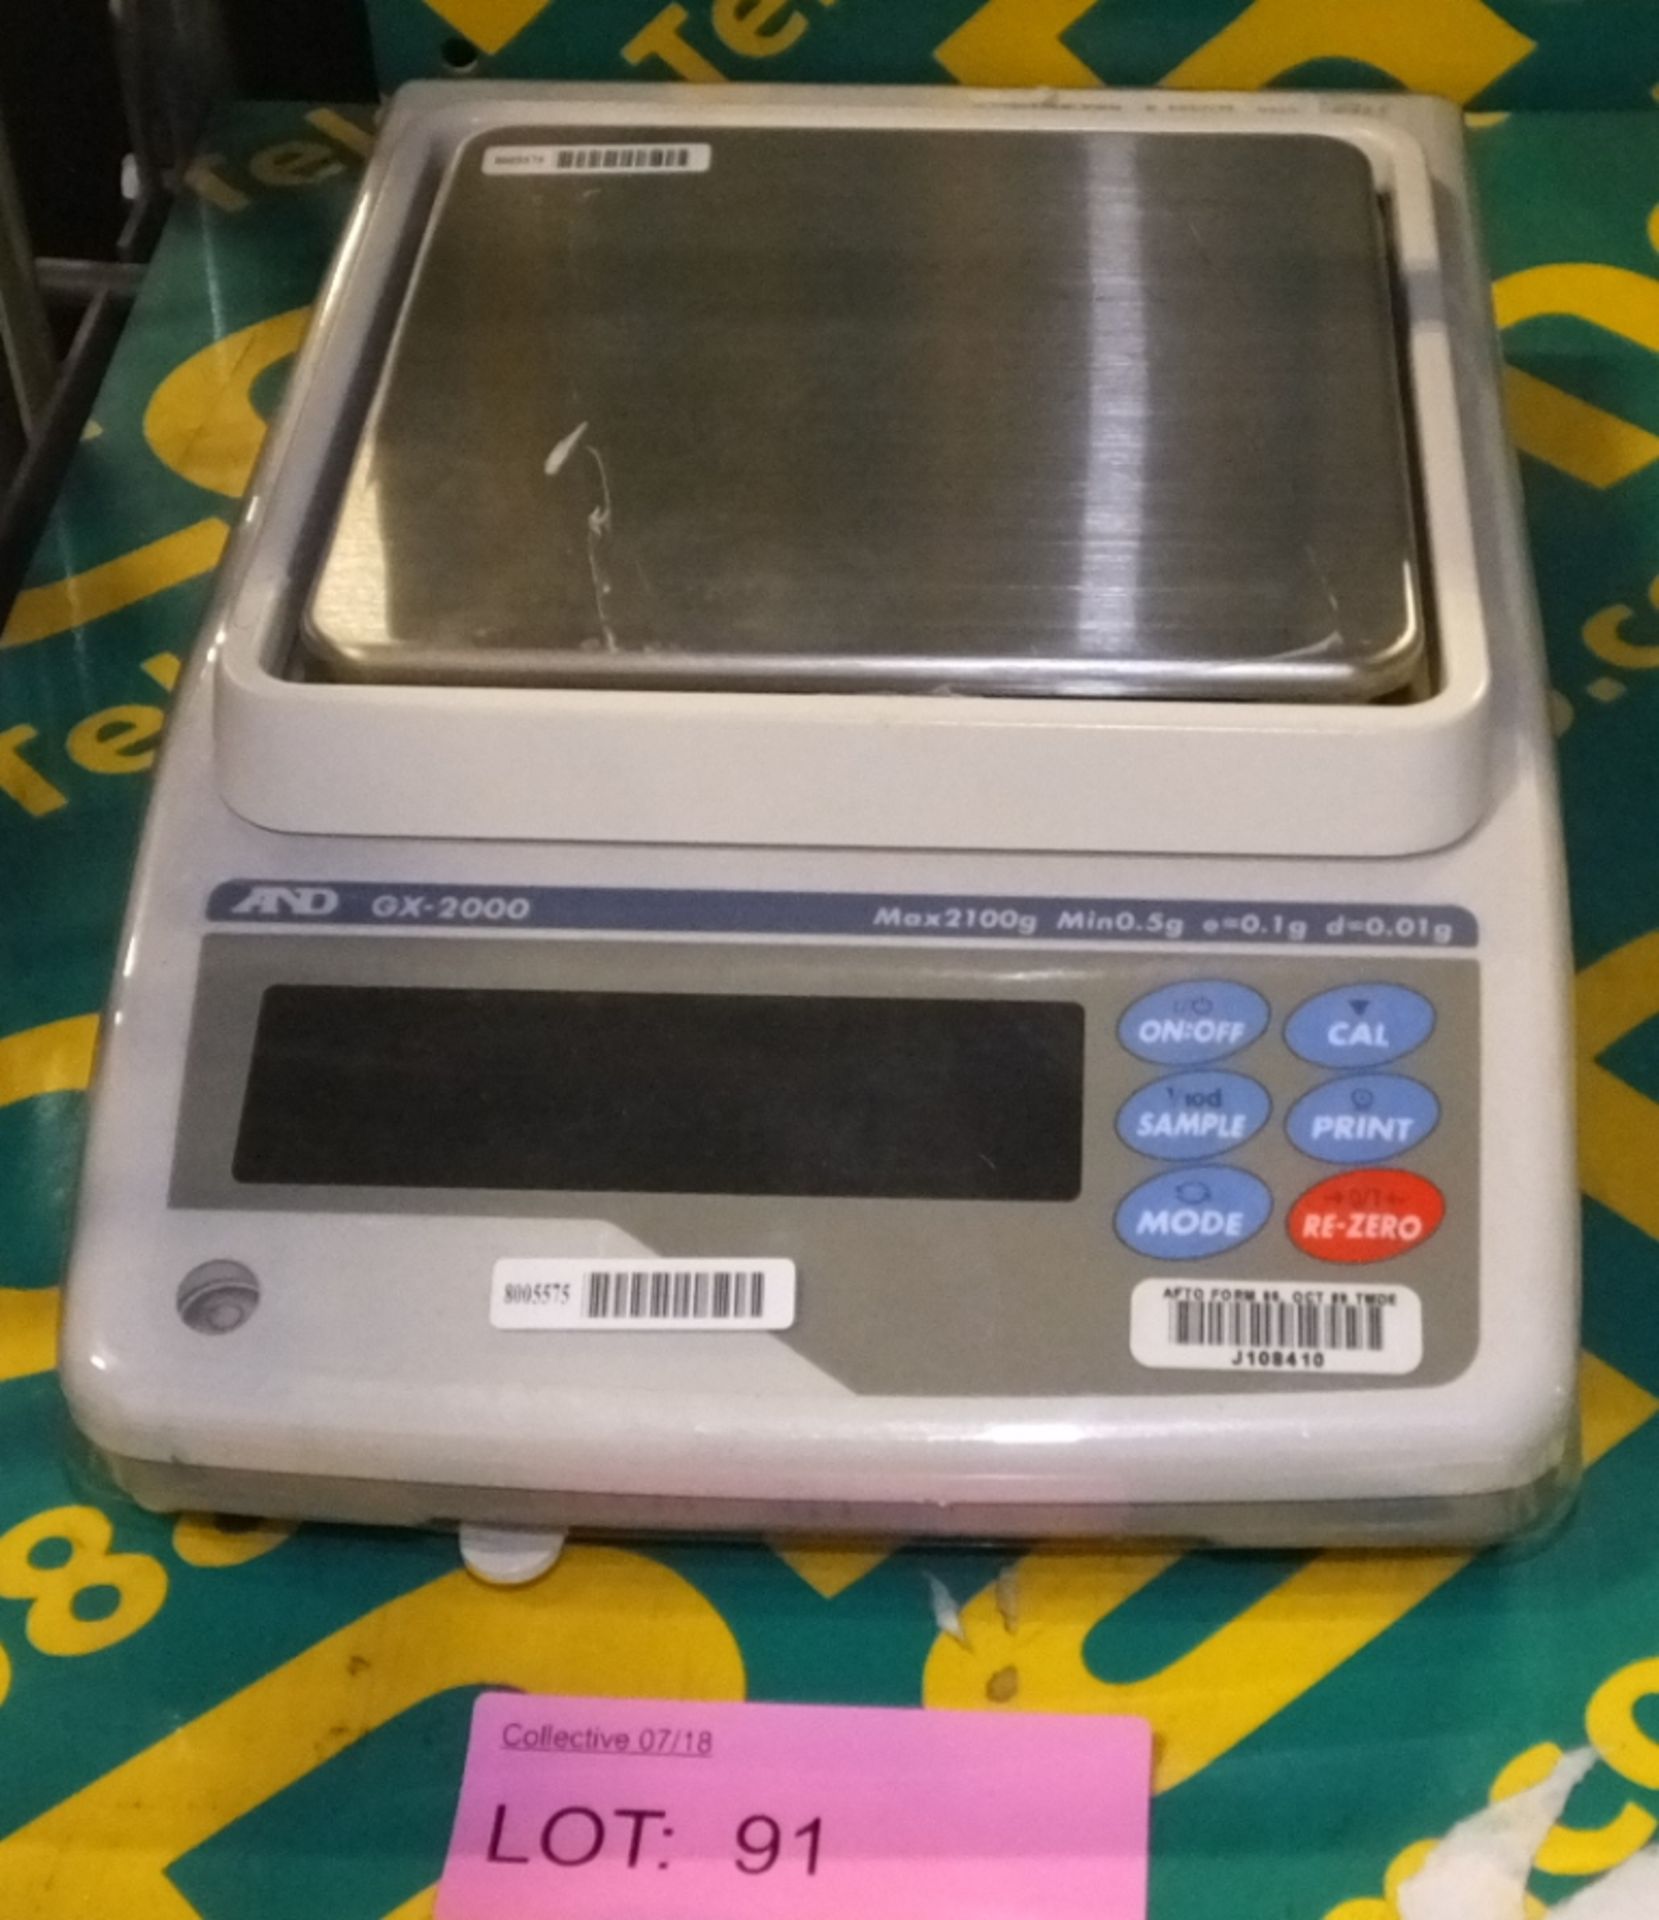 AND GX-2000 laboratory digital scales